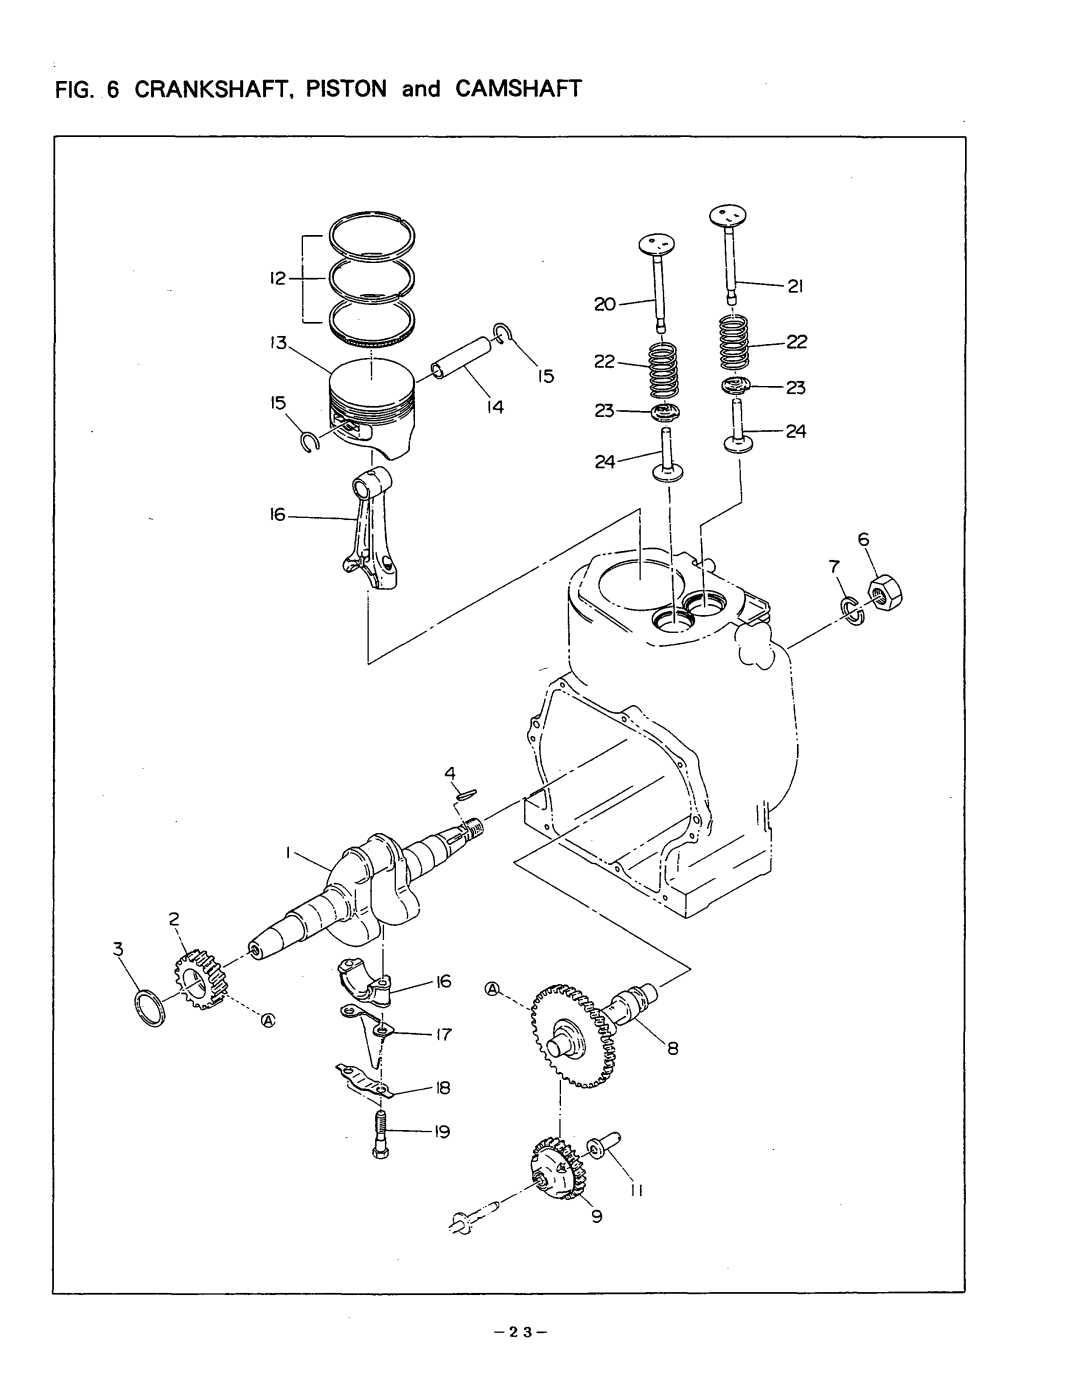 Subaru Robin Power Products R1210 manual CRANKSHAFT,PISTON and CAMSHAFT 